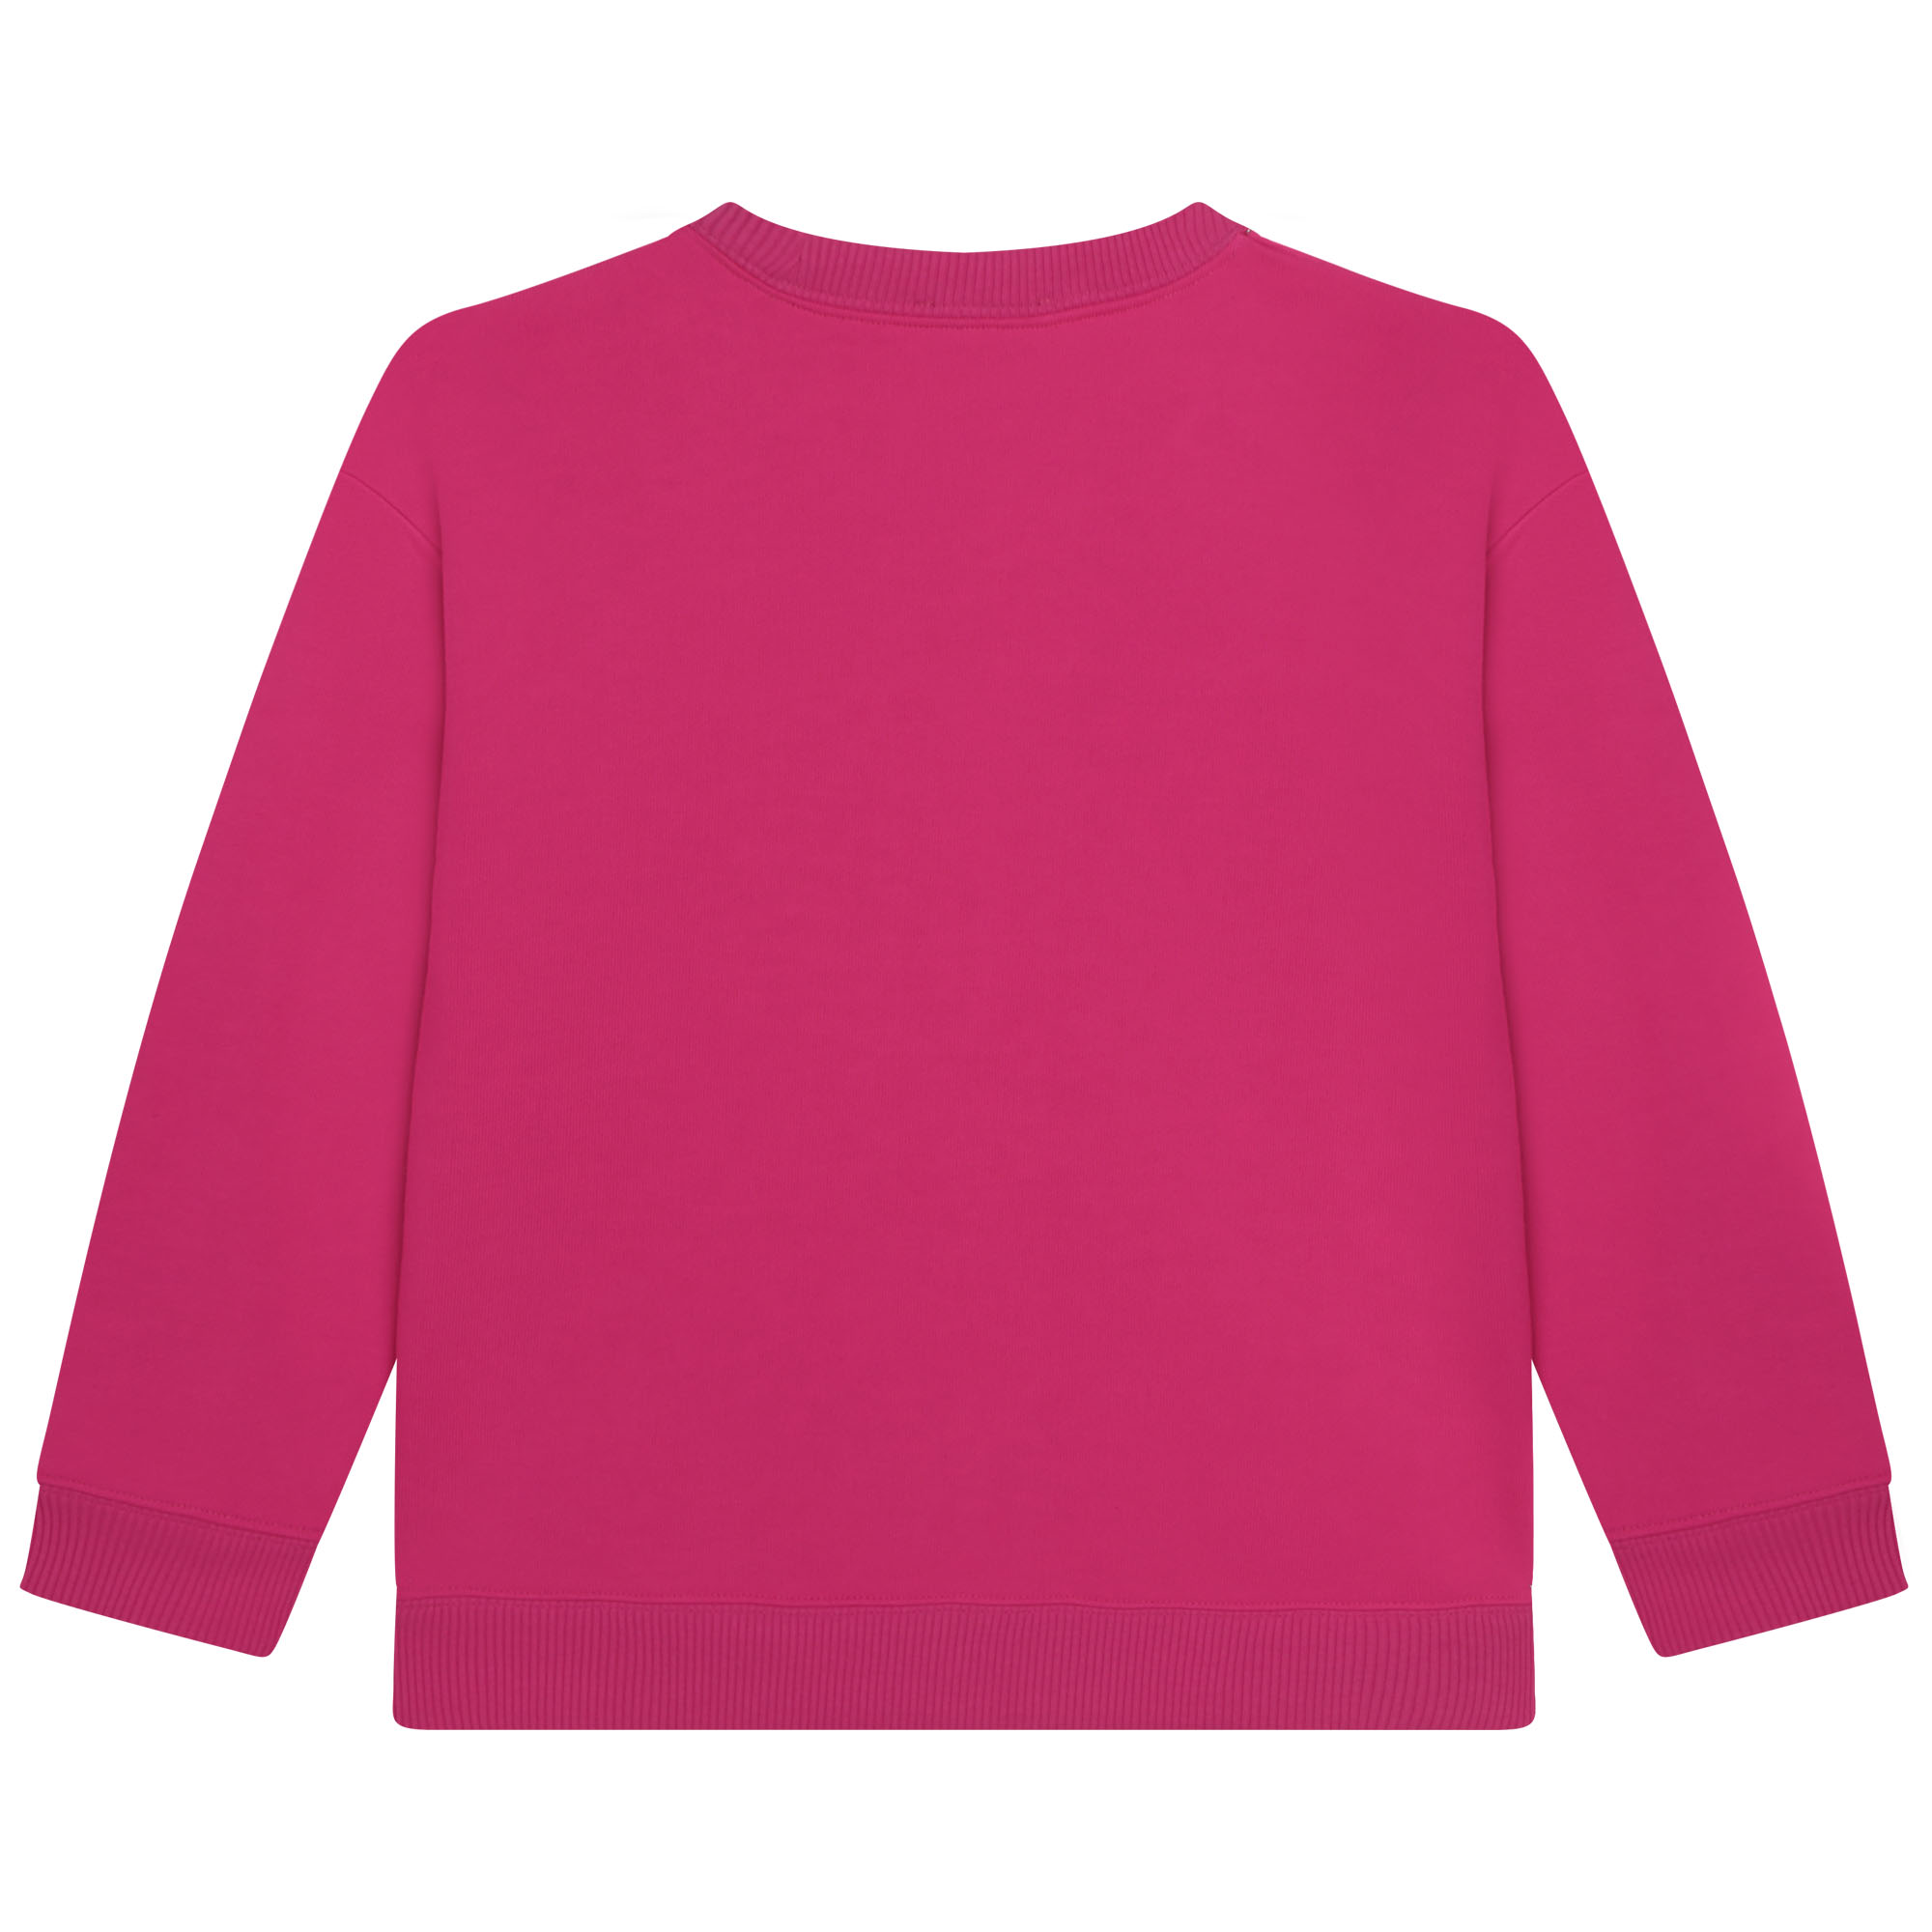 Fleece-Sweater MARC JACOBS Für UNISEX